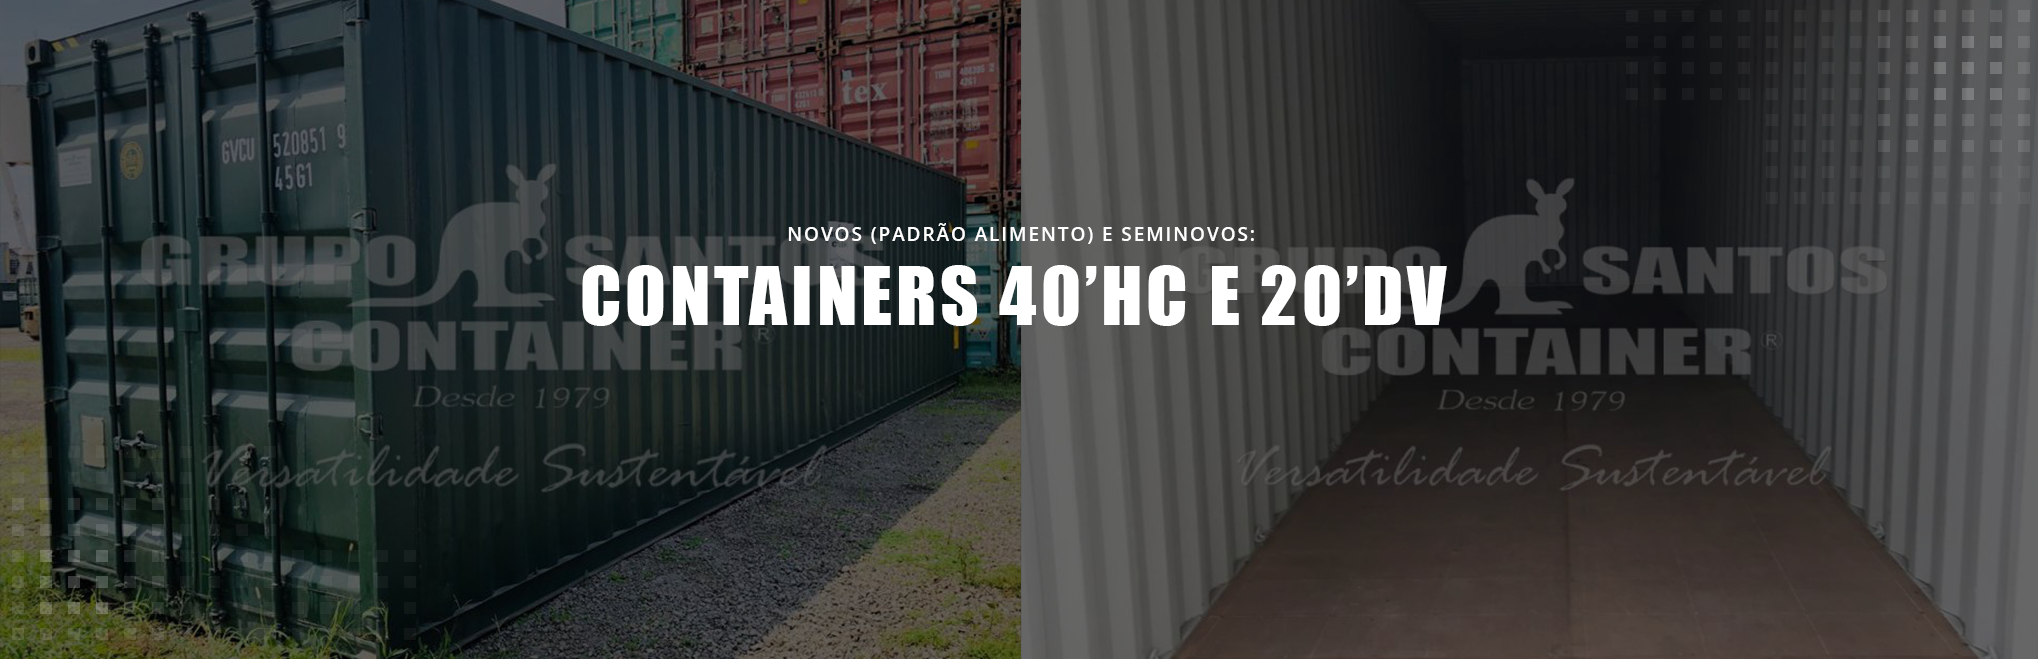 Containers 40’HC e 20’DV